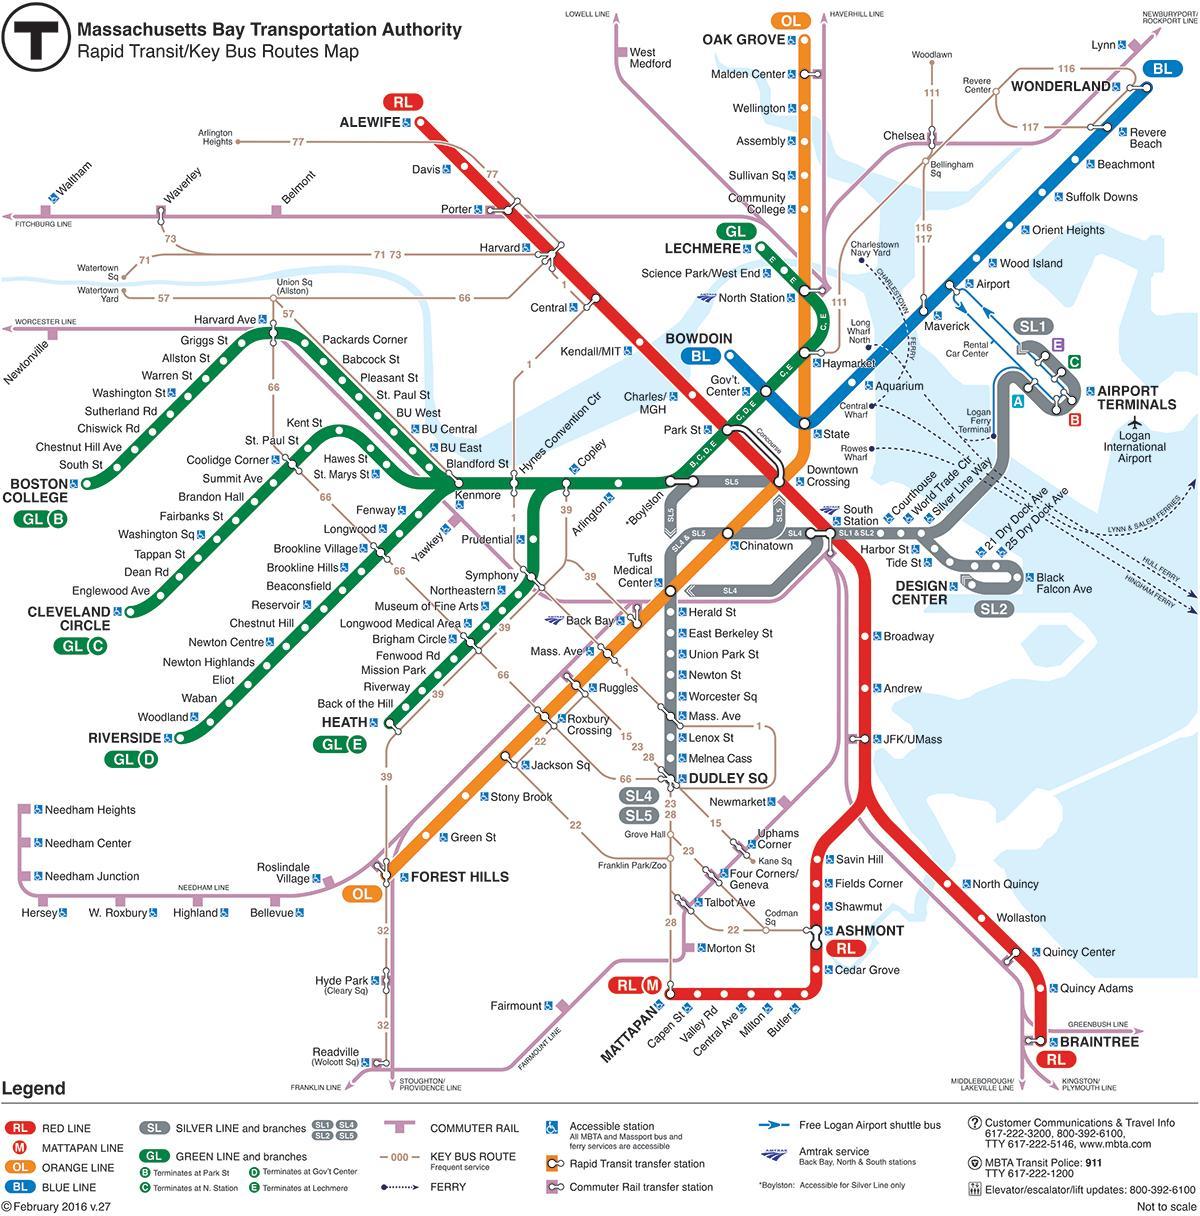 MBTA რუკაზე წითელი ხაზი